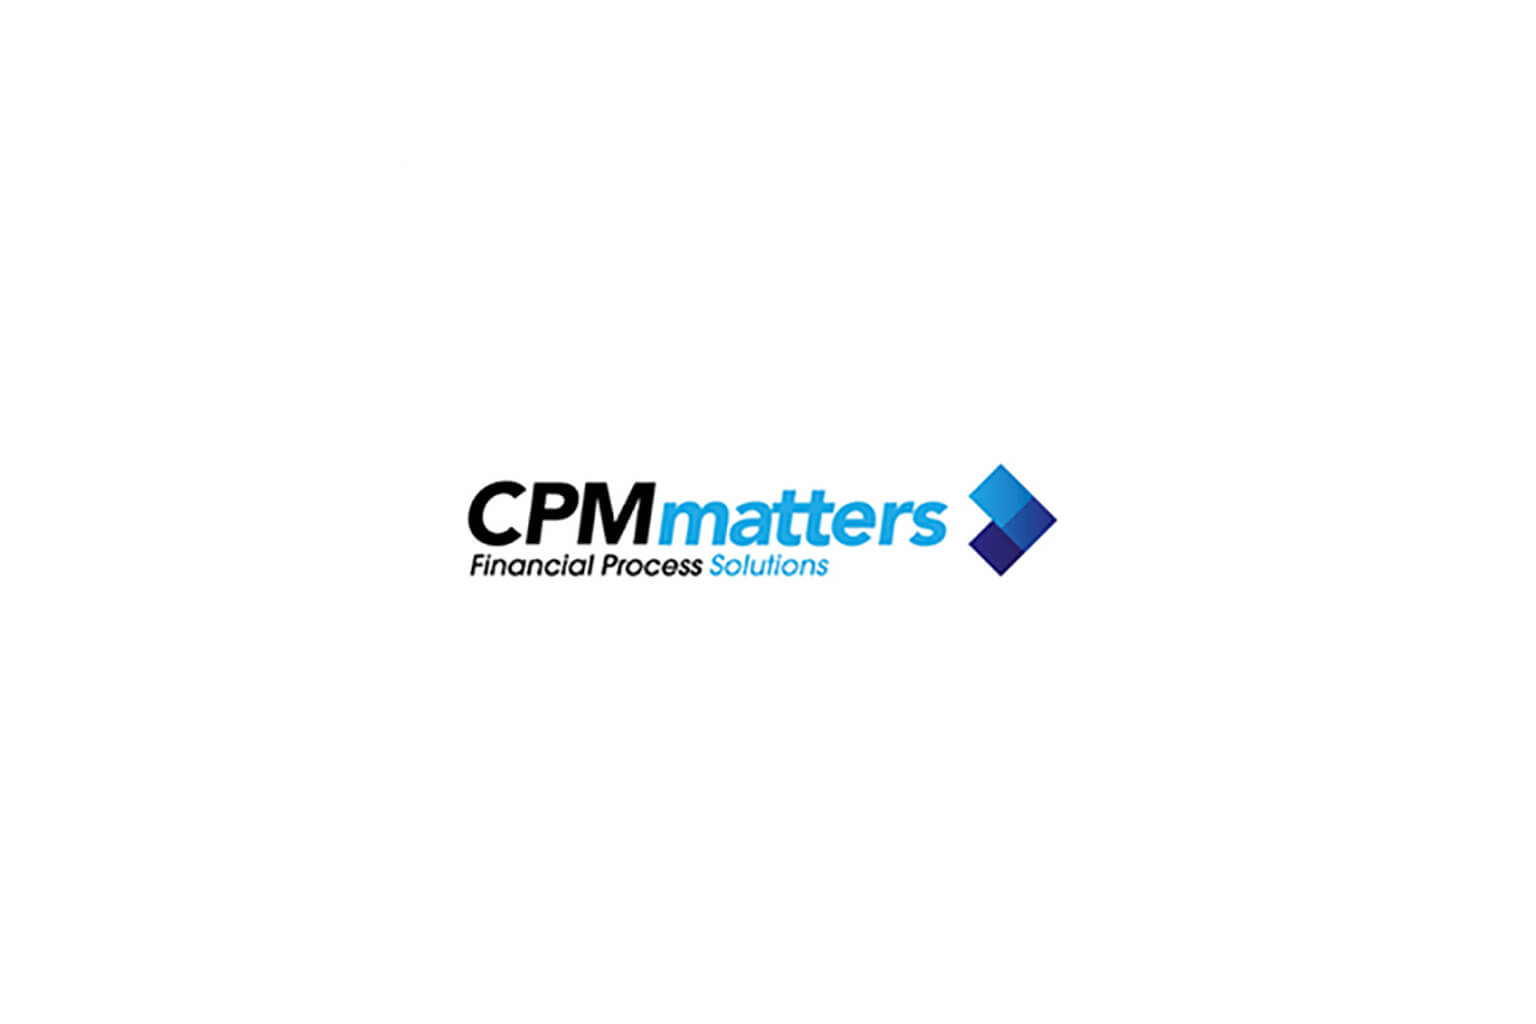 CPM-matters